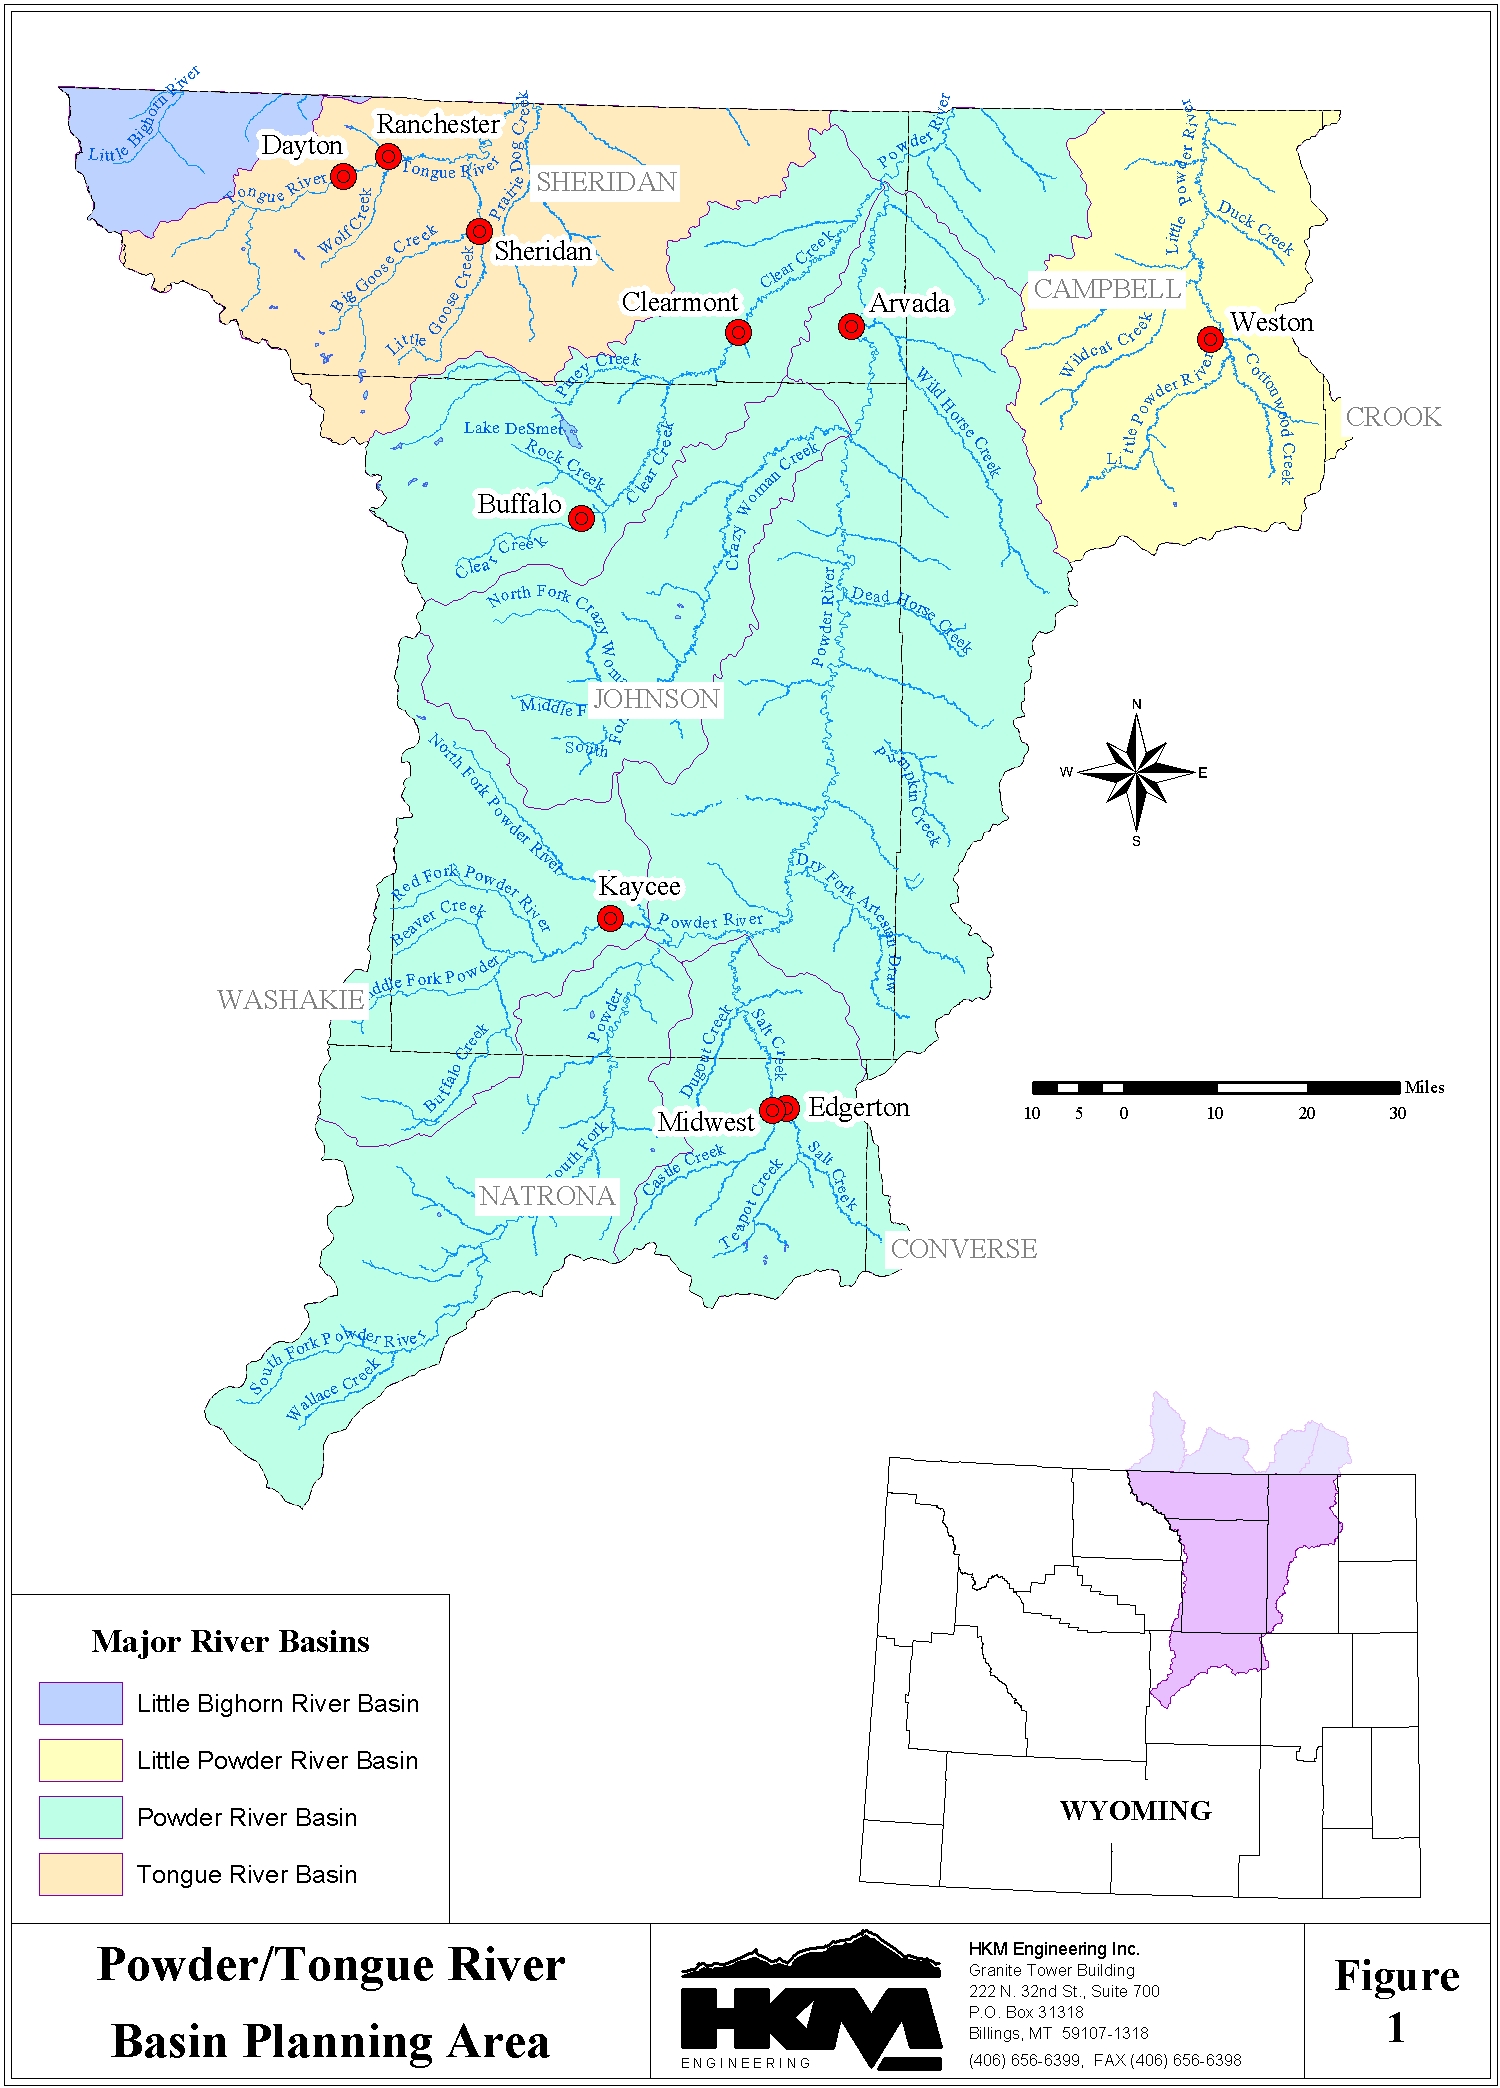 Powder/Tongue River Basin Planning Area